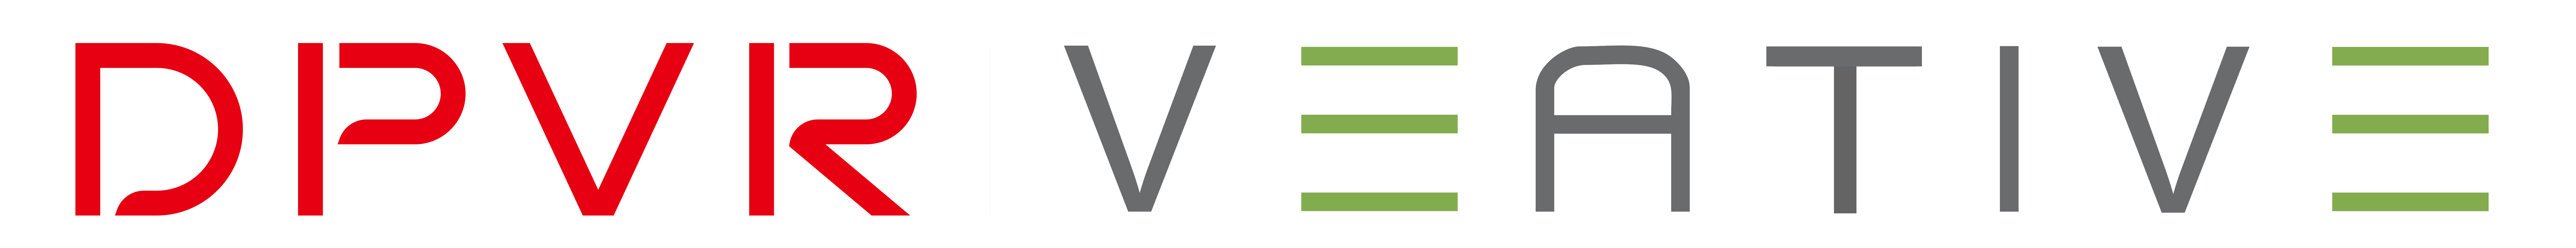 logo_dpvr_veative